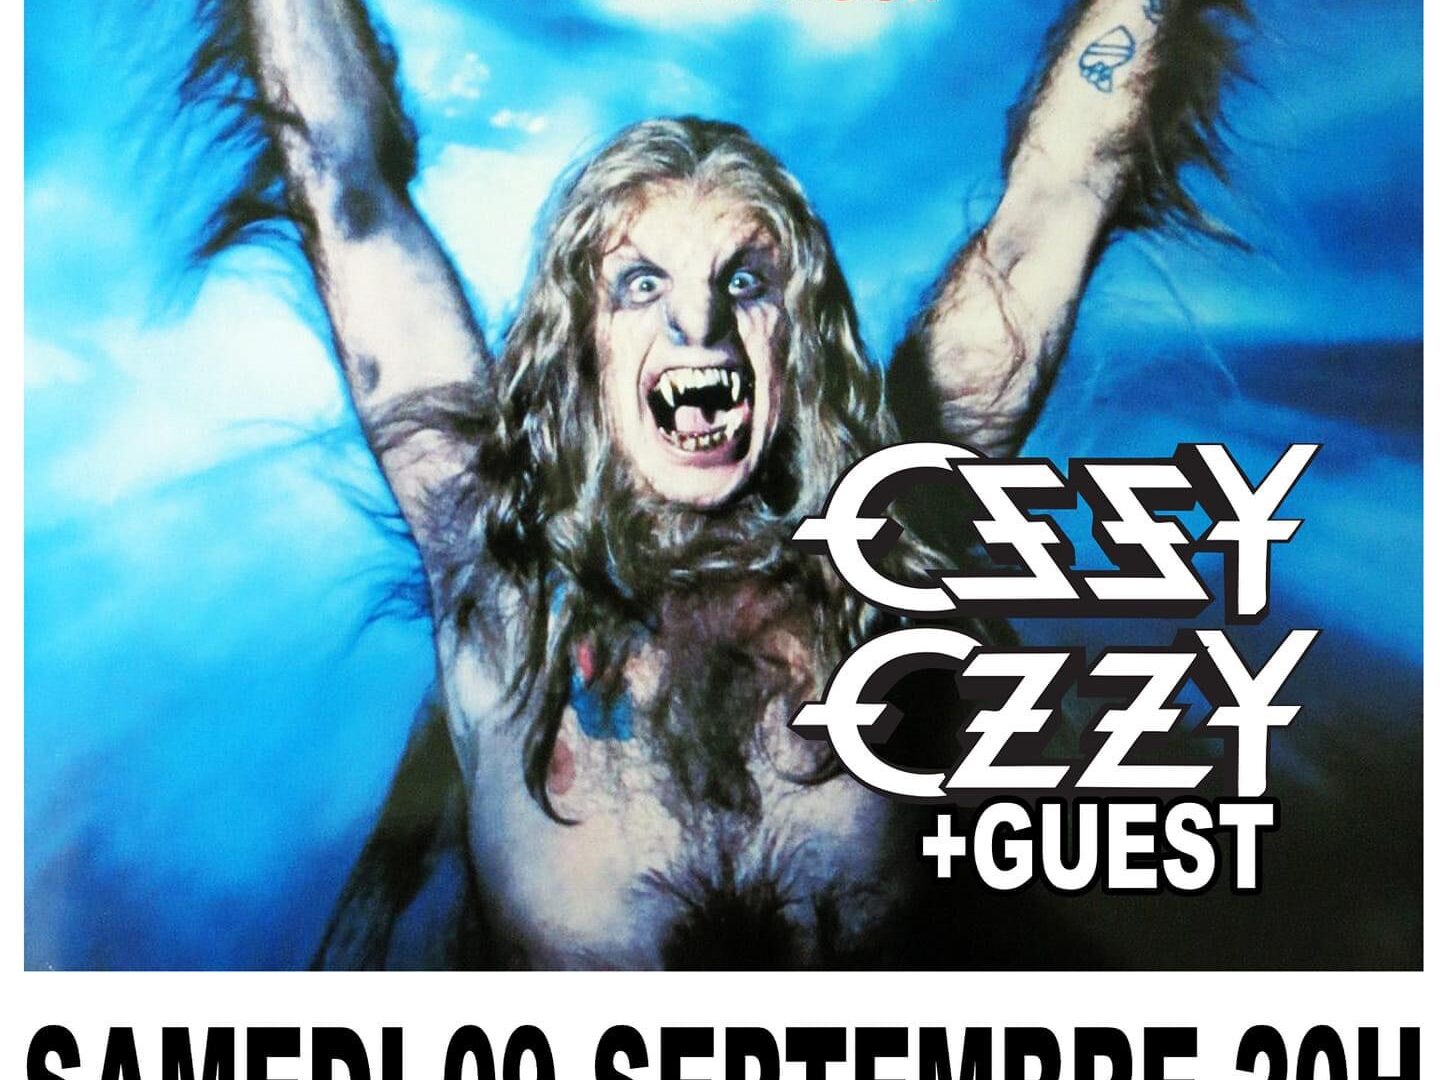 Concert Ossy Ozzy + Etouffe Chrétiens